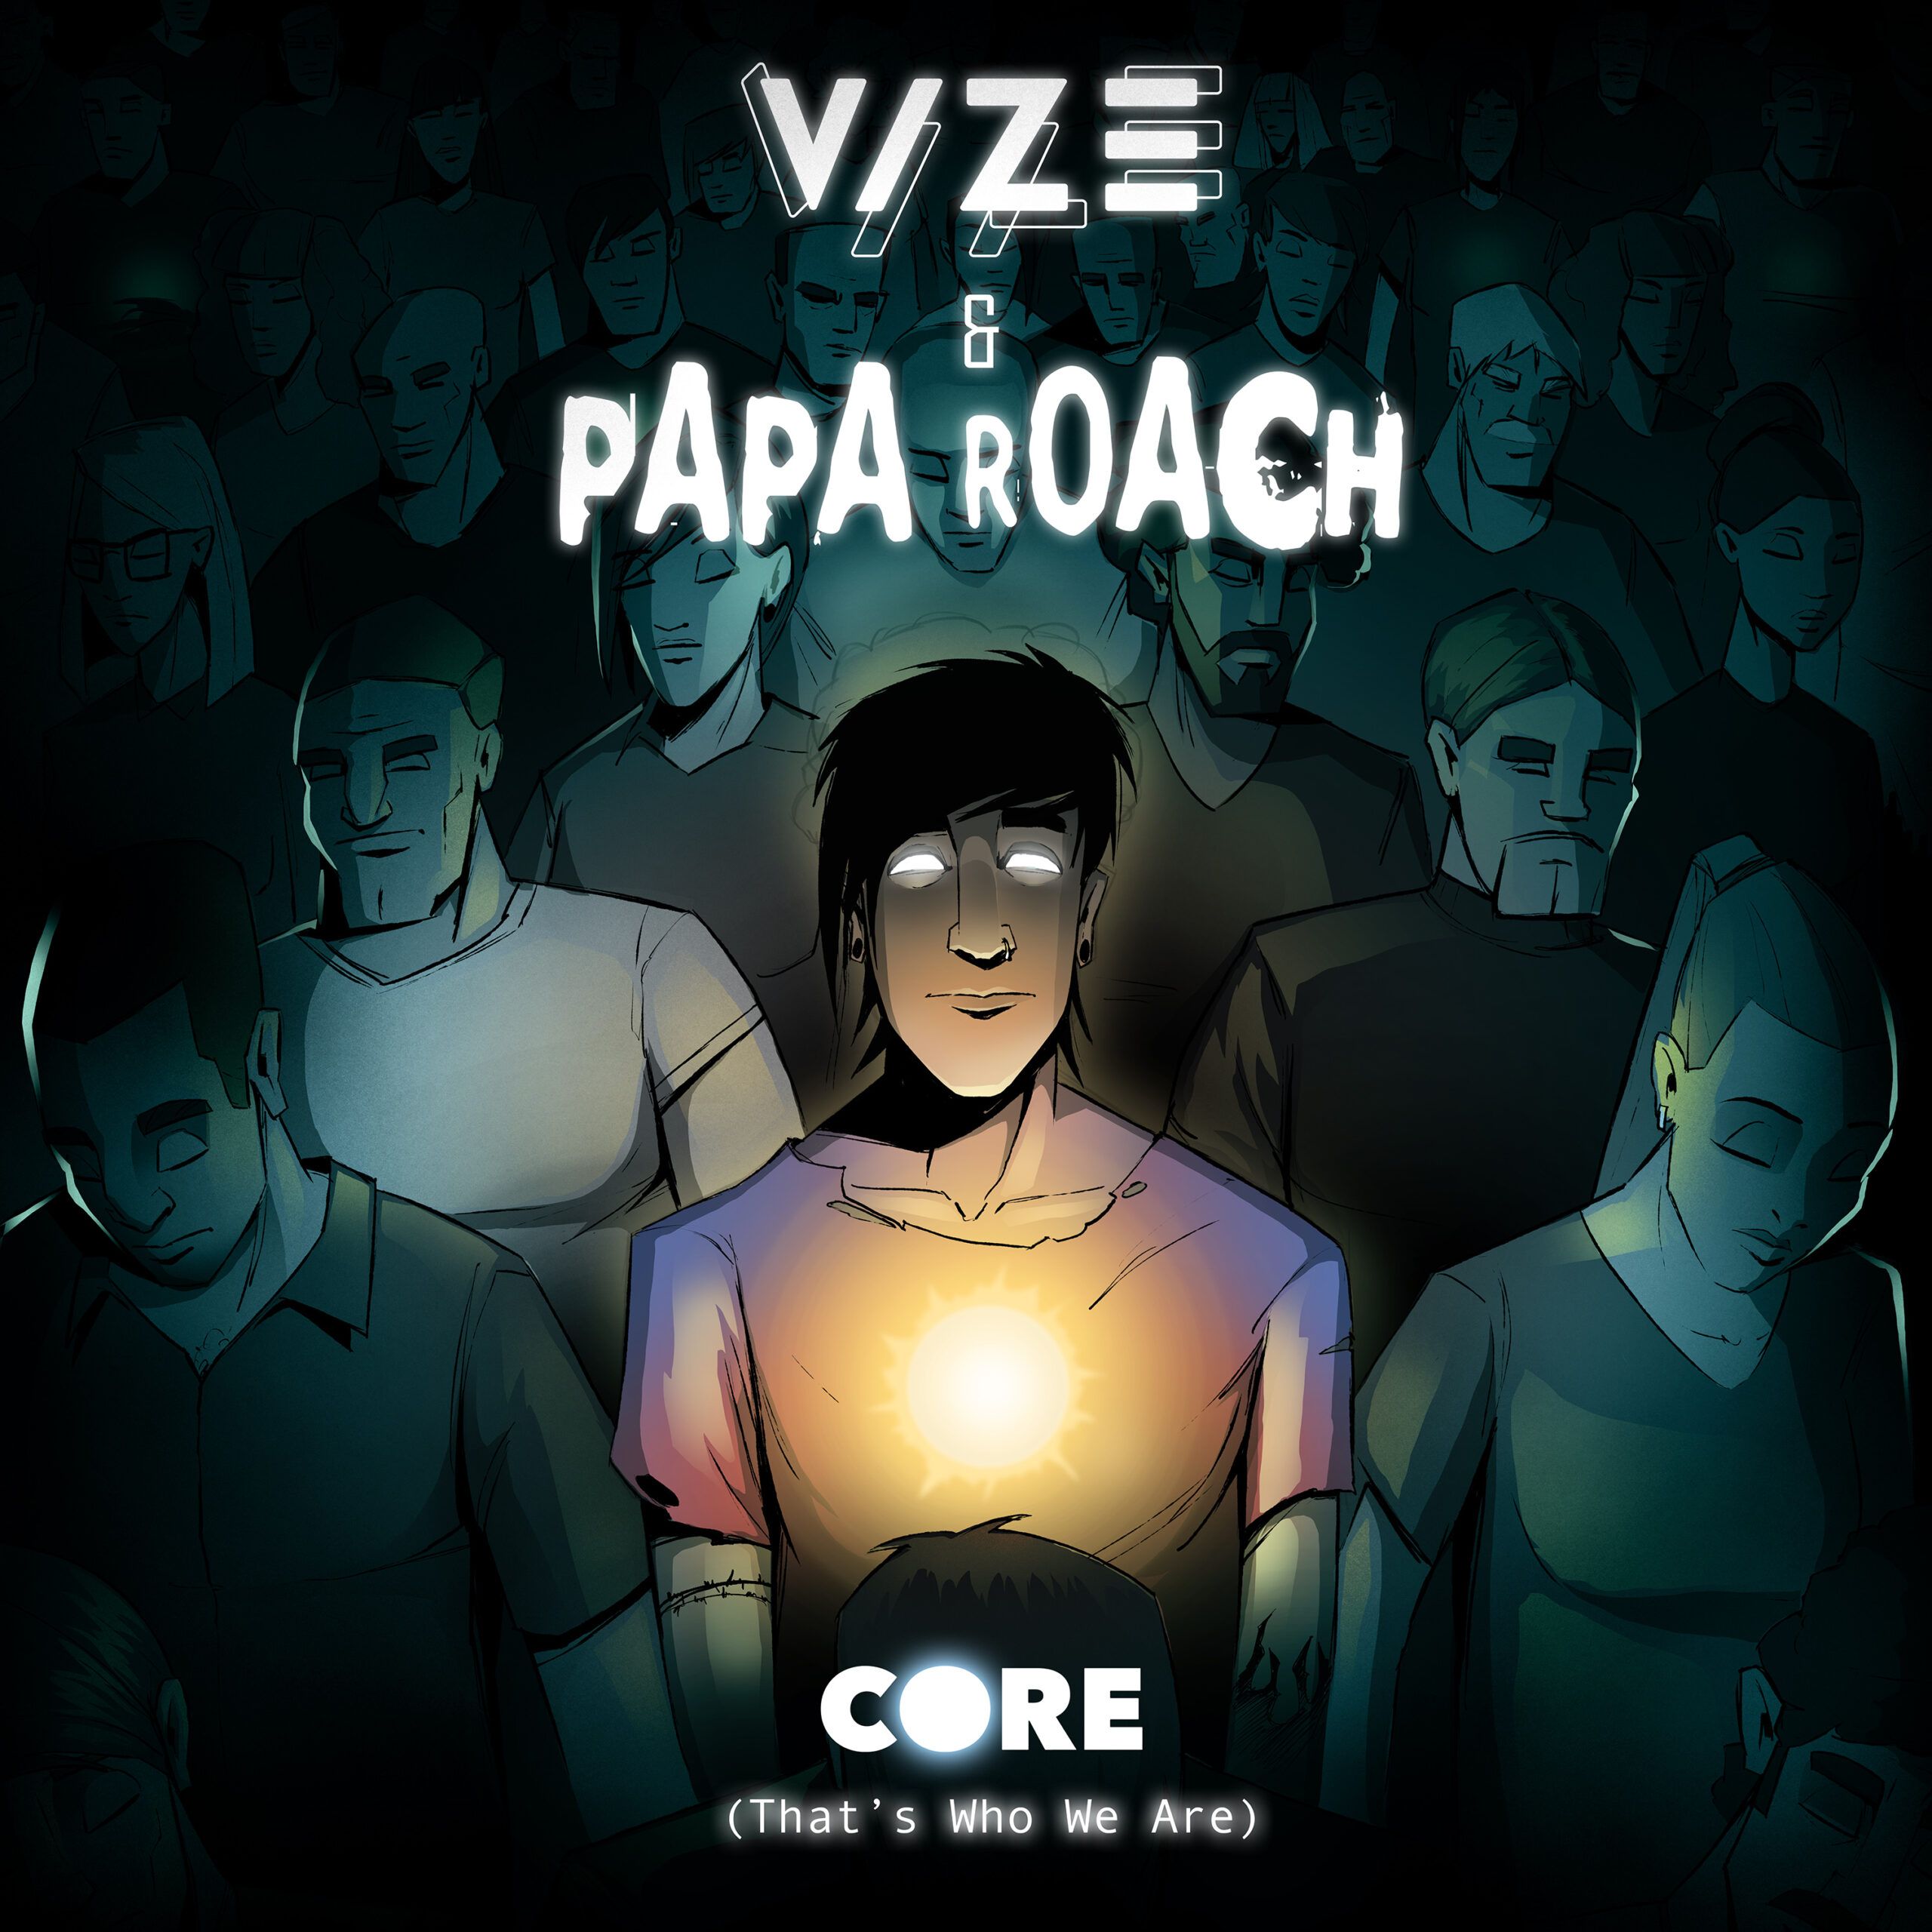 'Core (That's Who They Are)'-Video mit Vize veröffentlicht